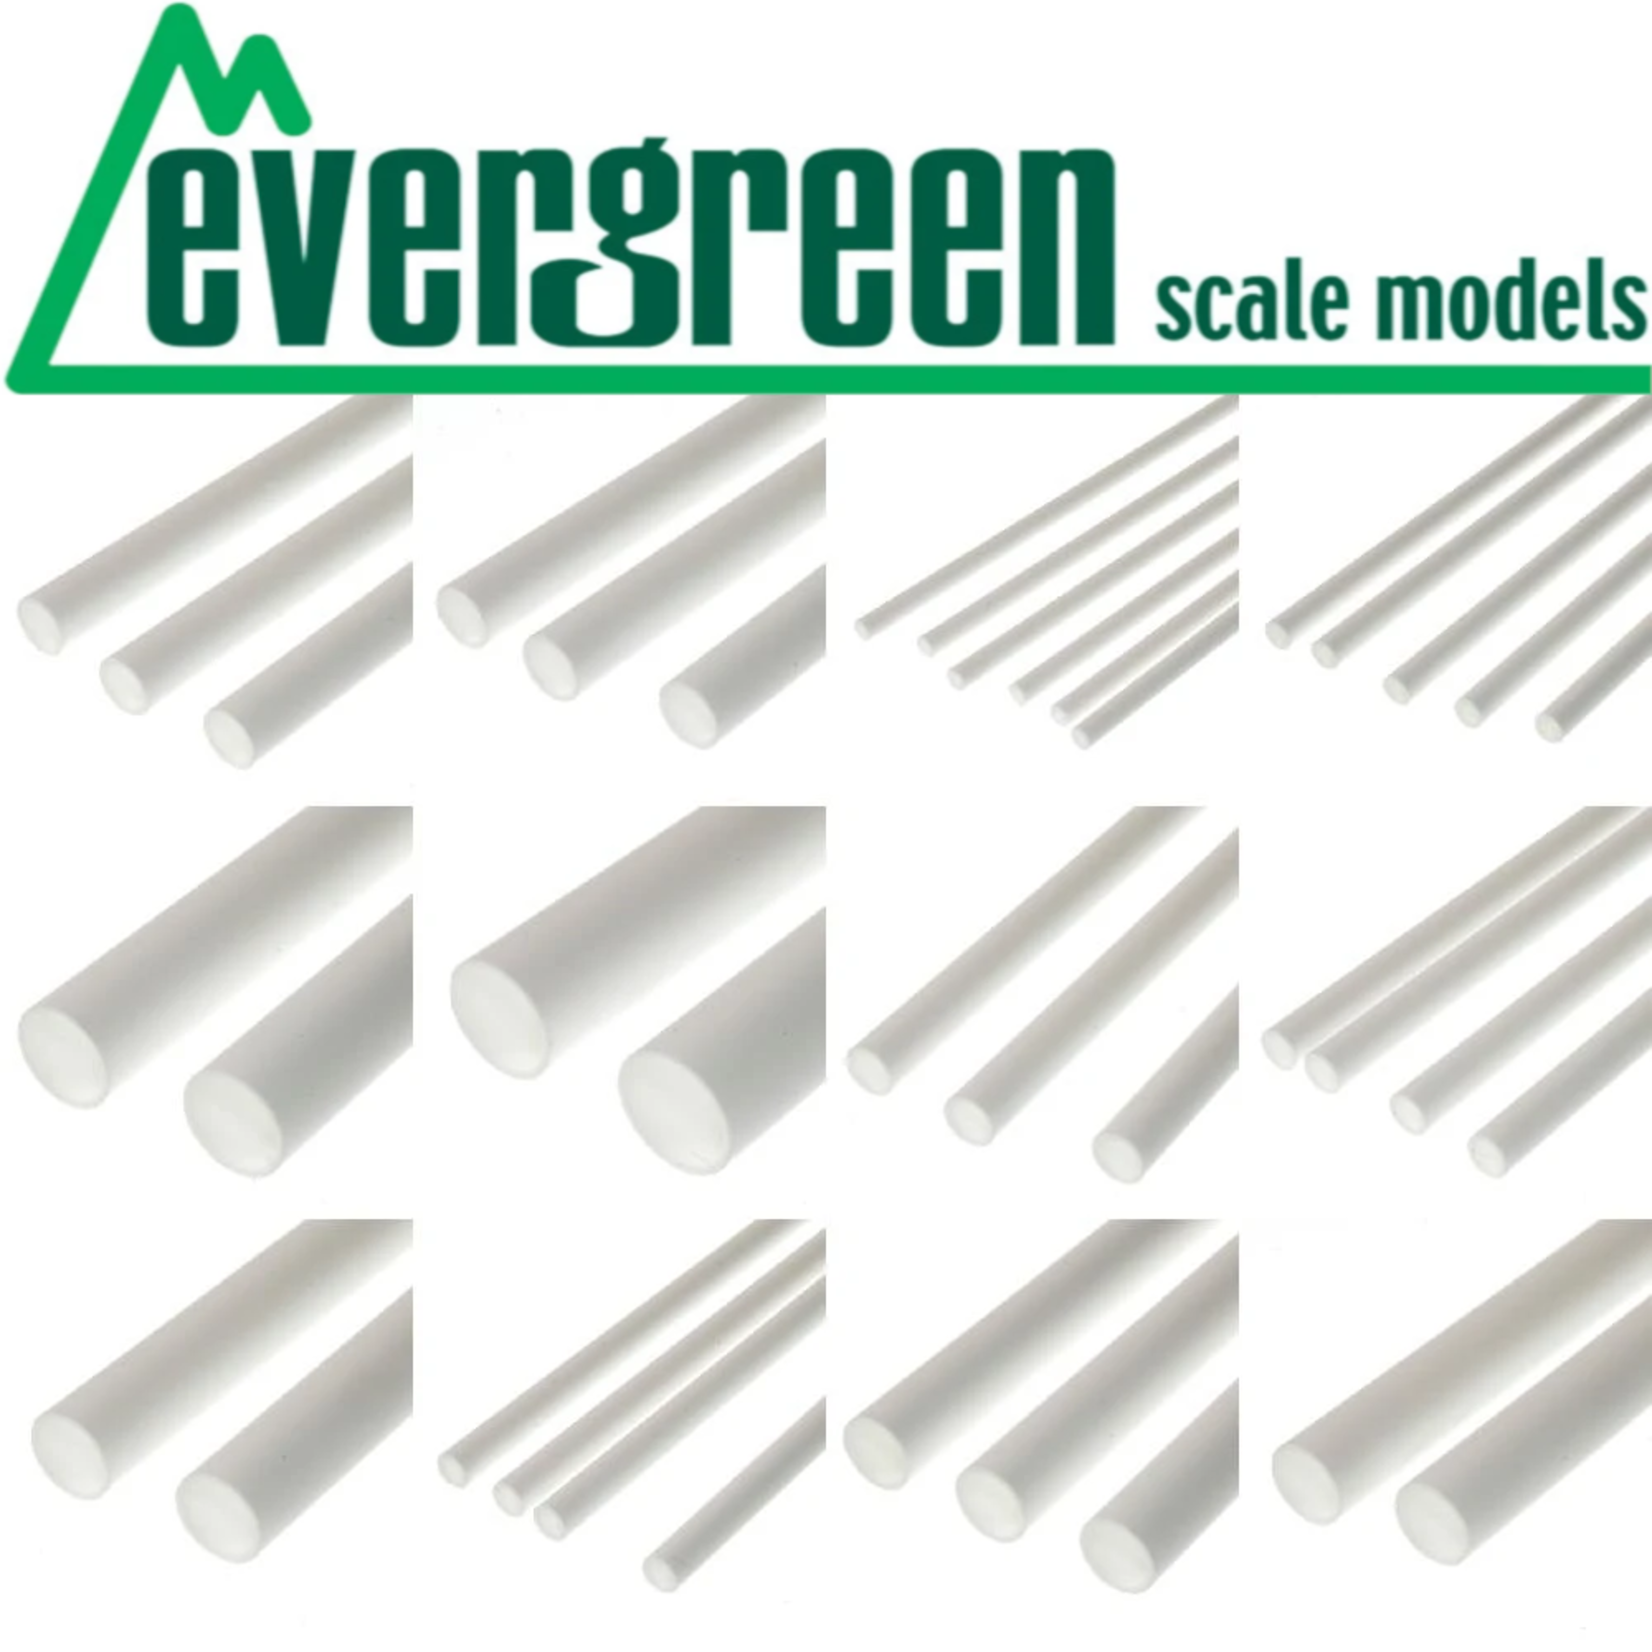 Evergreen Scale Models EVE137 Styrene .030x.156 Strip (10pc)